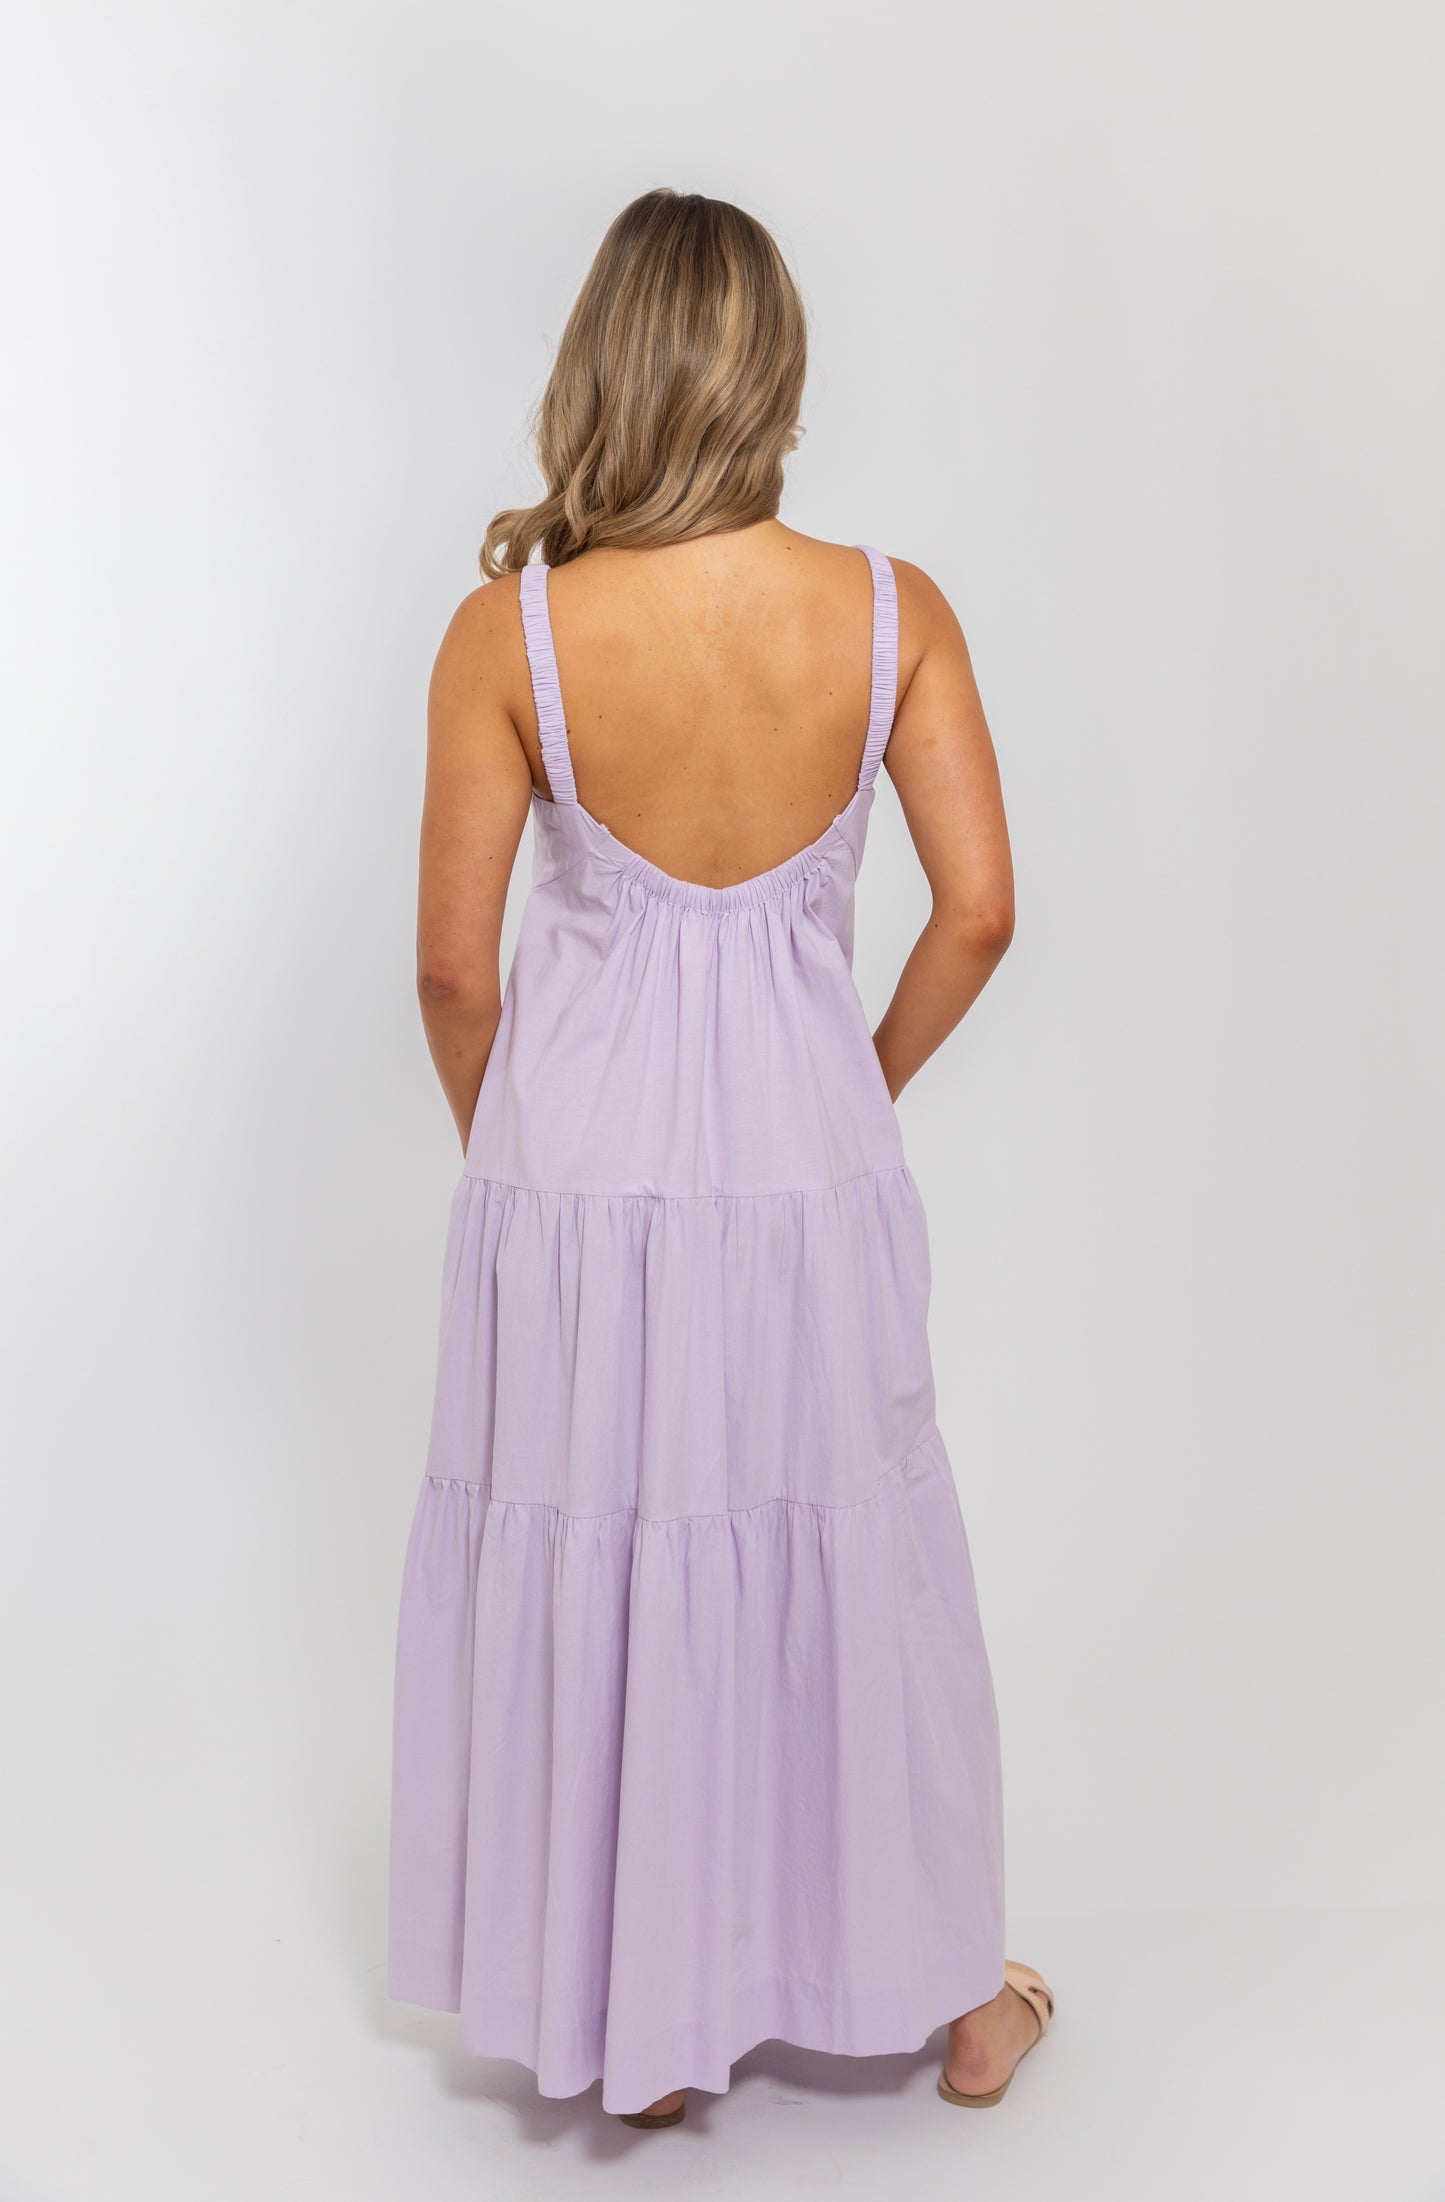 The Leland Lilac Dress